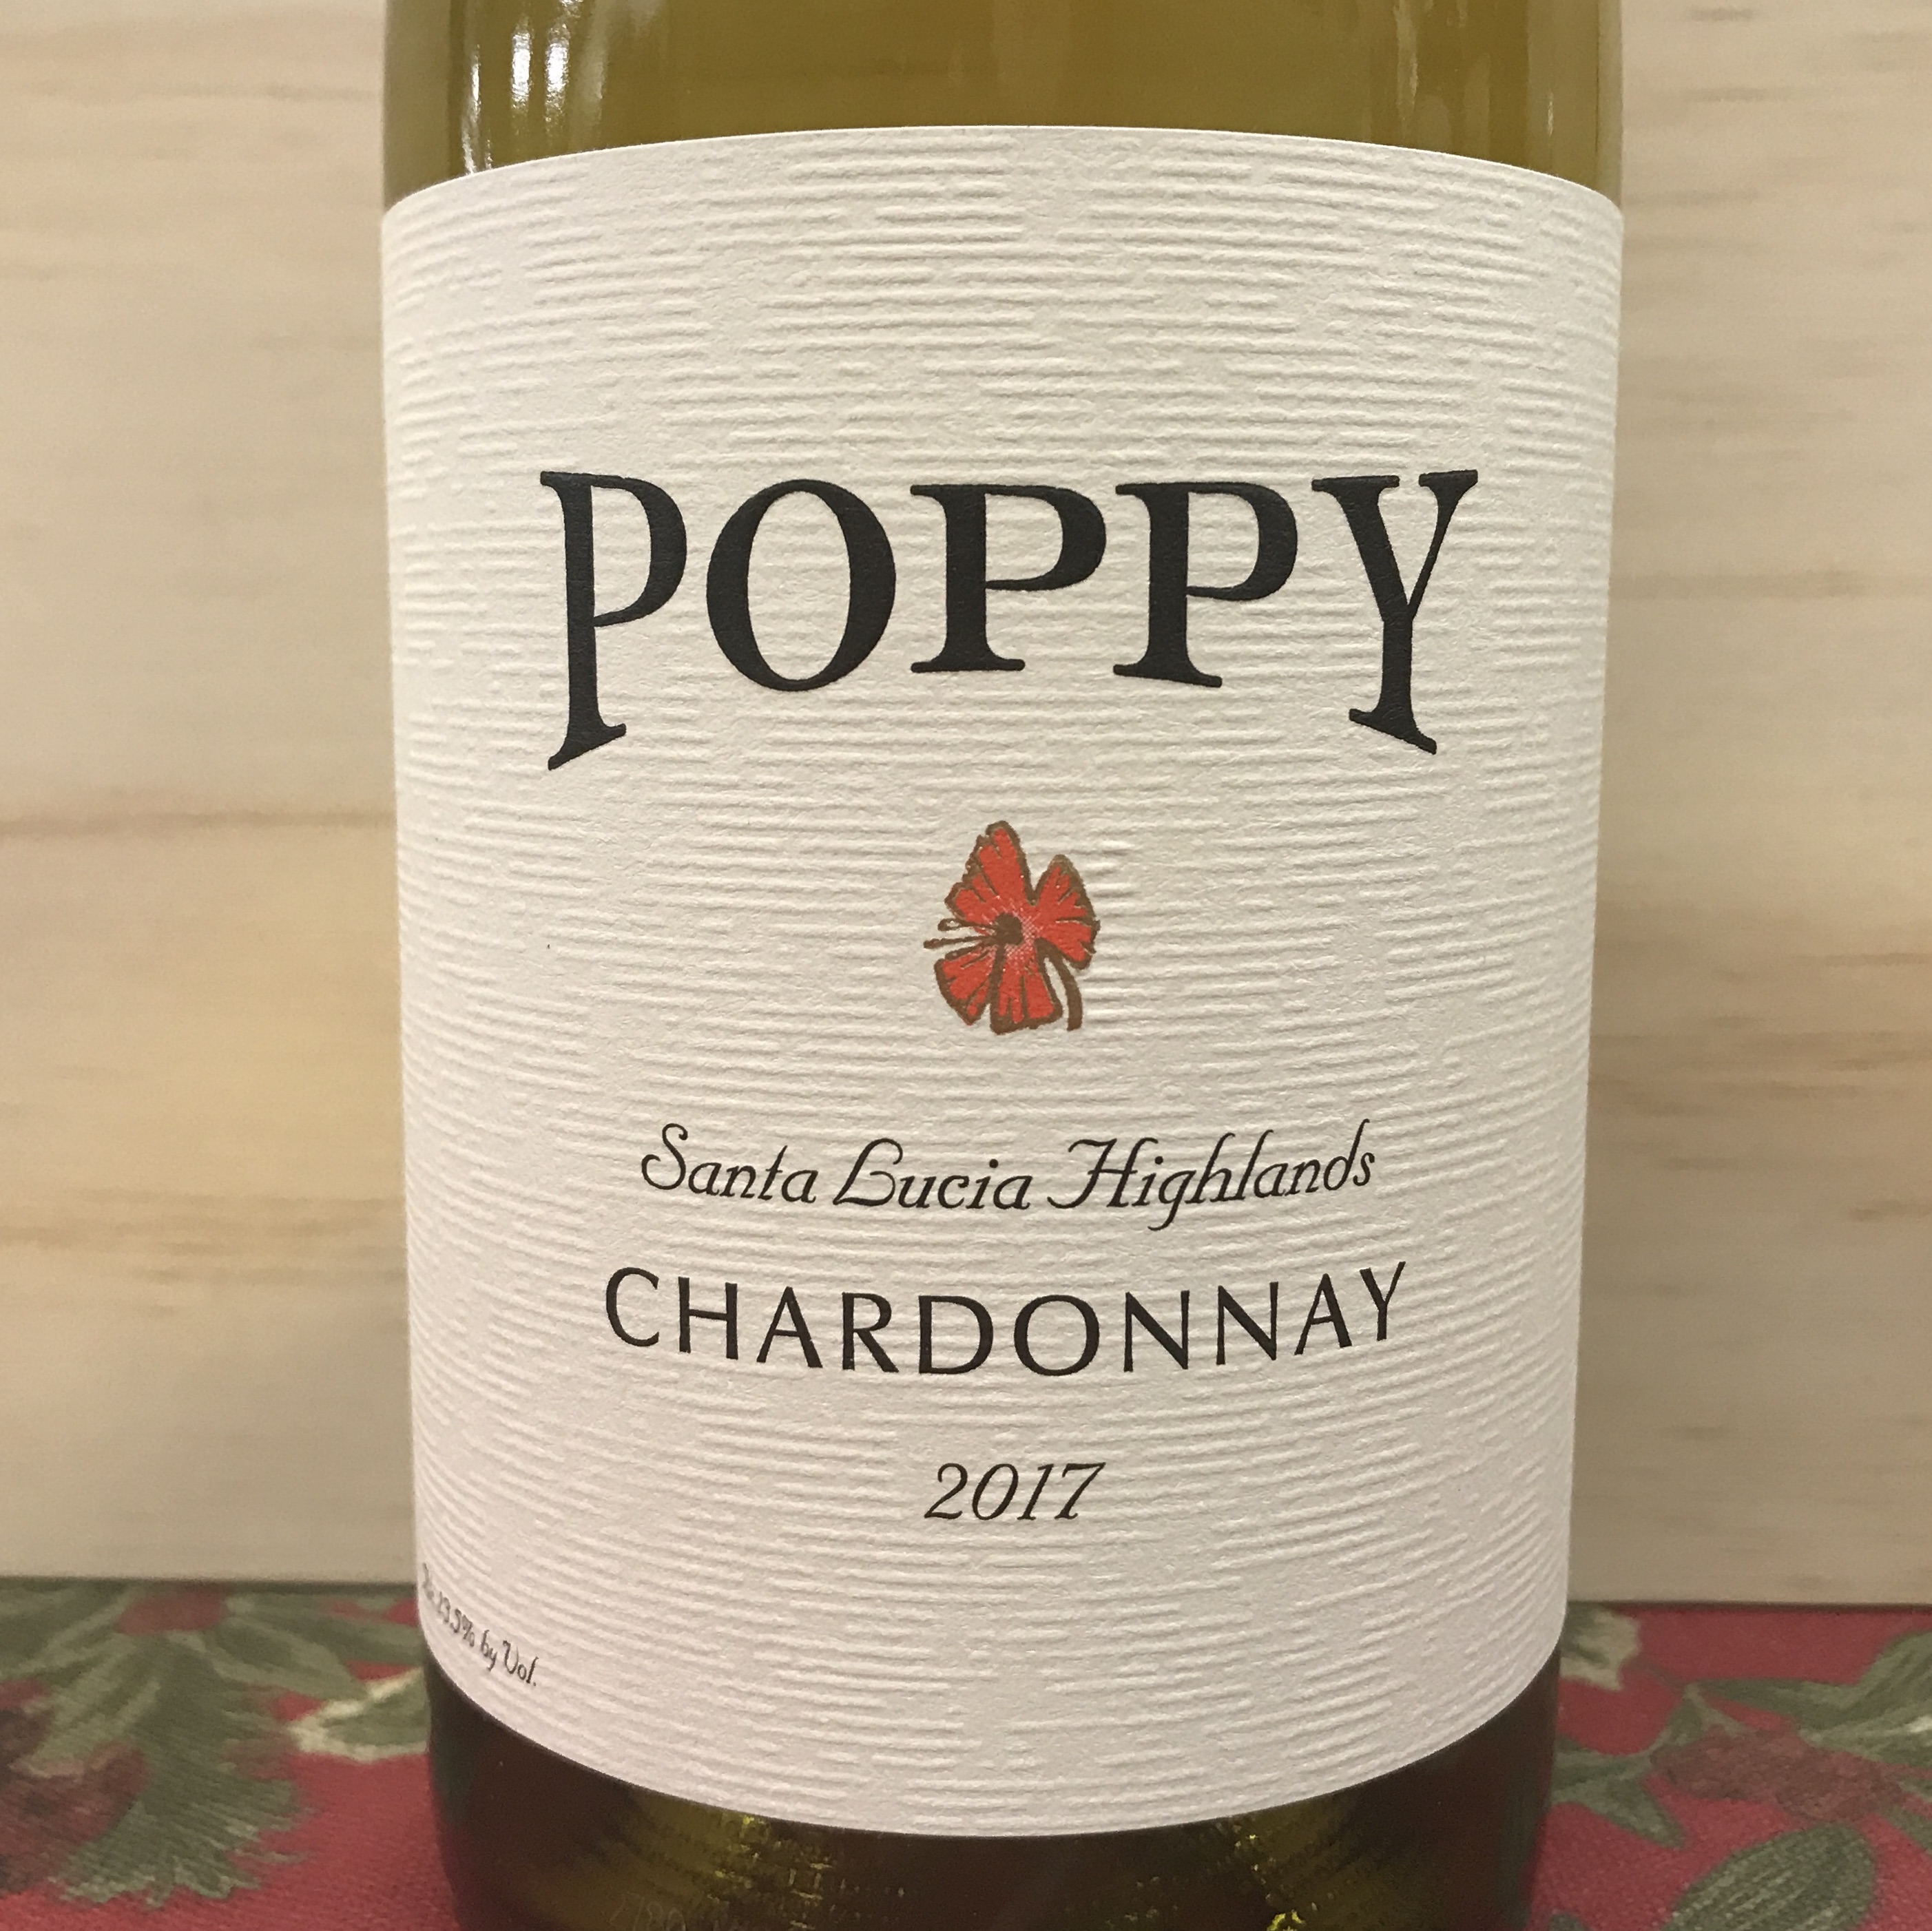 Poppy Chardonnay Santa Lucia Highlands 2017